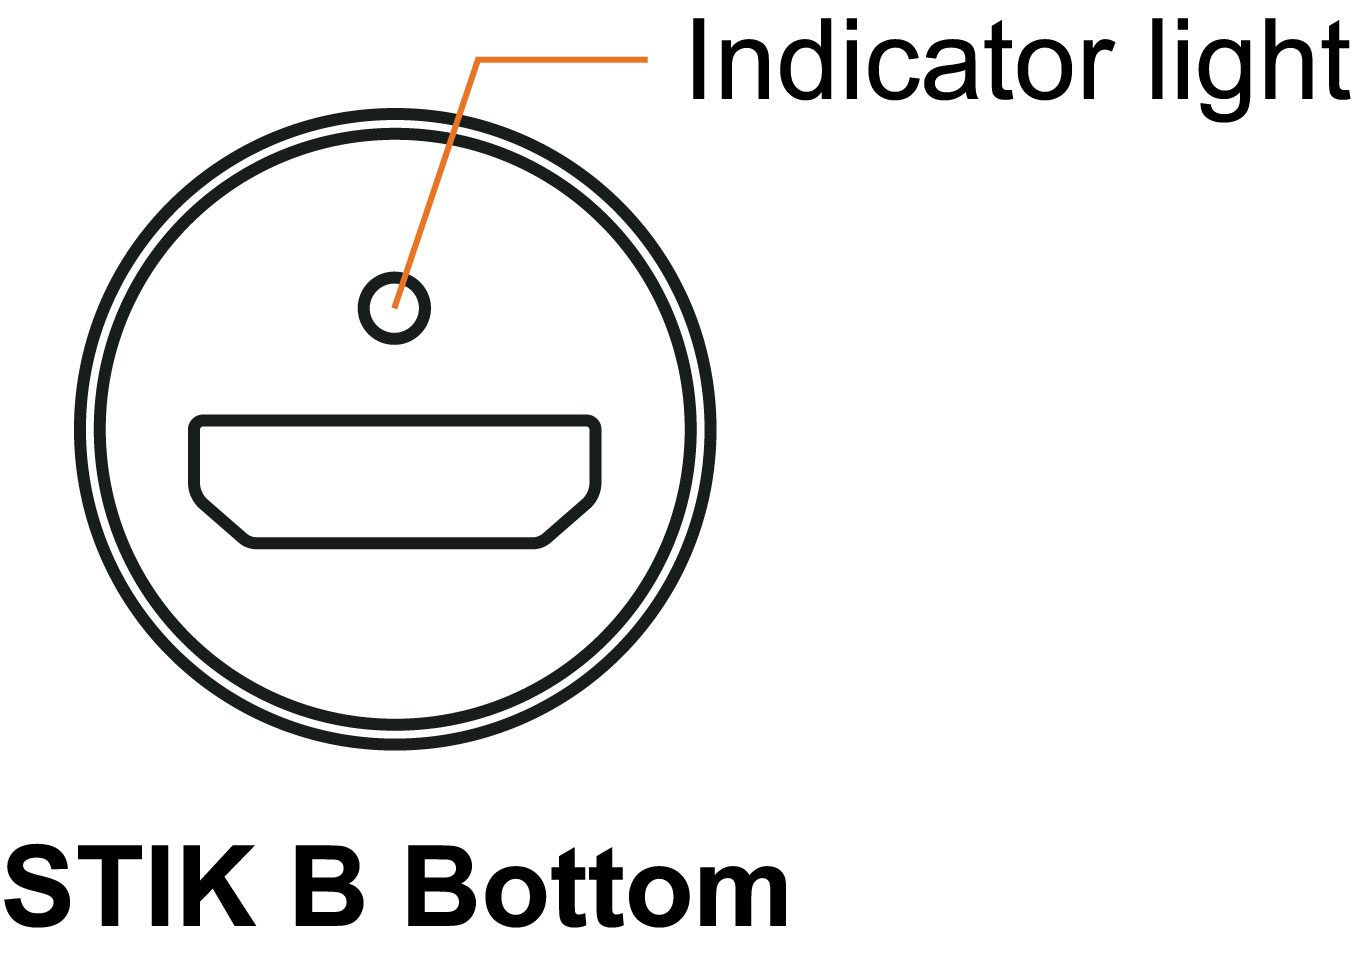 StikB Battery bottom infographic